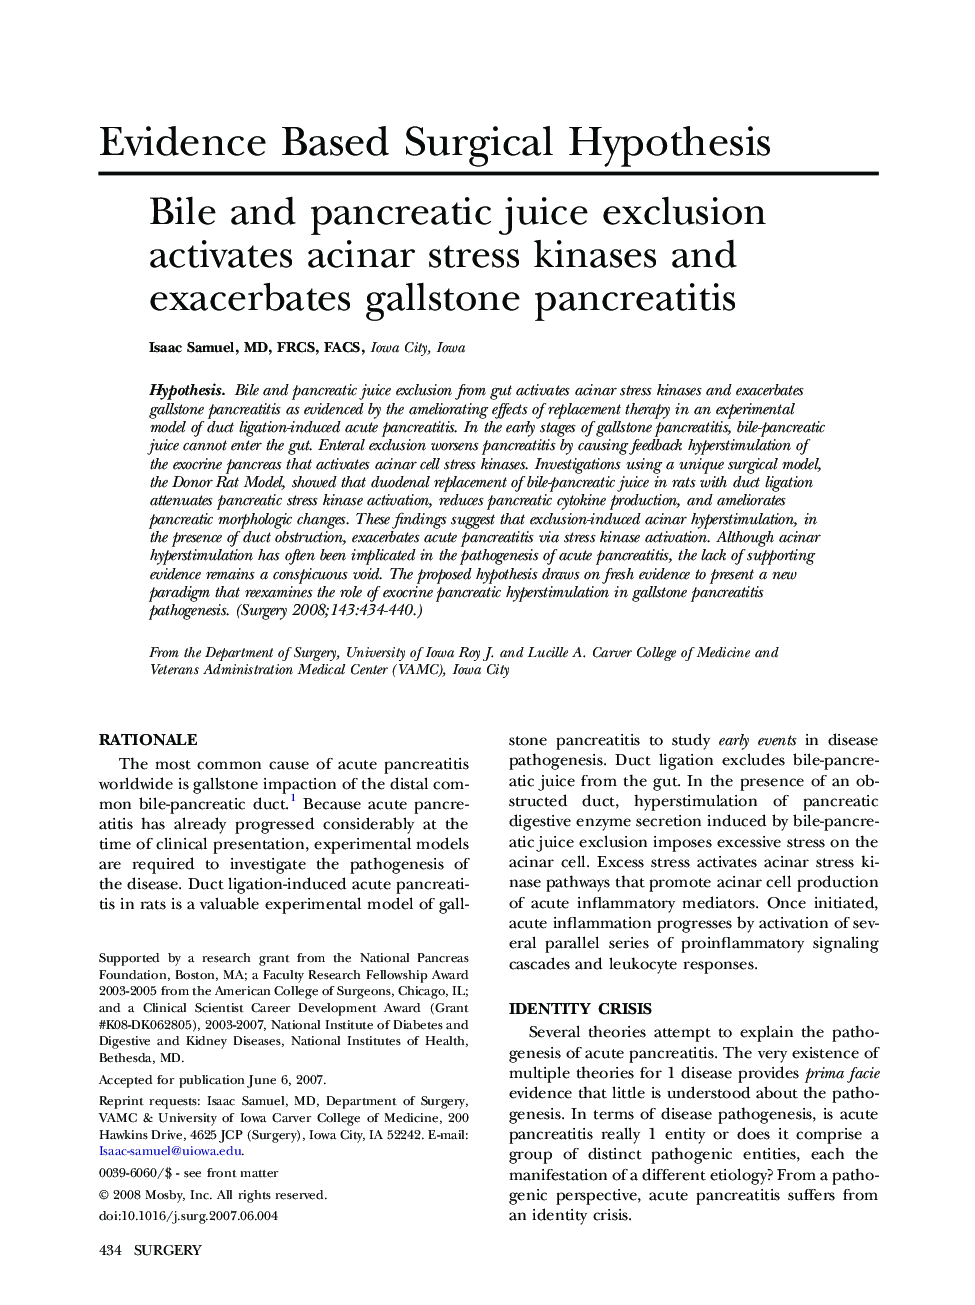 Bile and pancreatic juice exclusion activates acinar stress kinases and exacerbates gallstone pancreatitis 